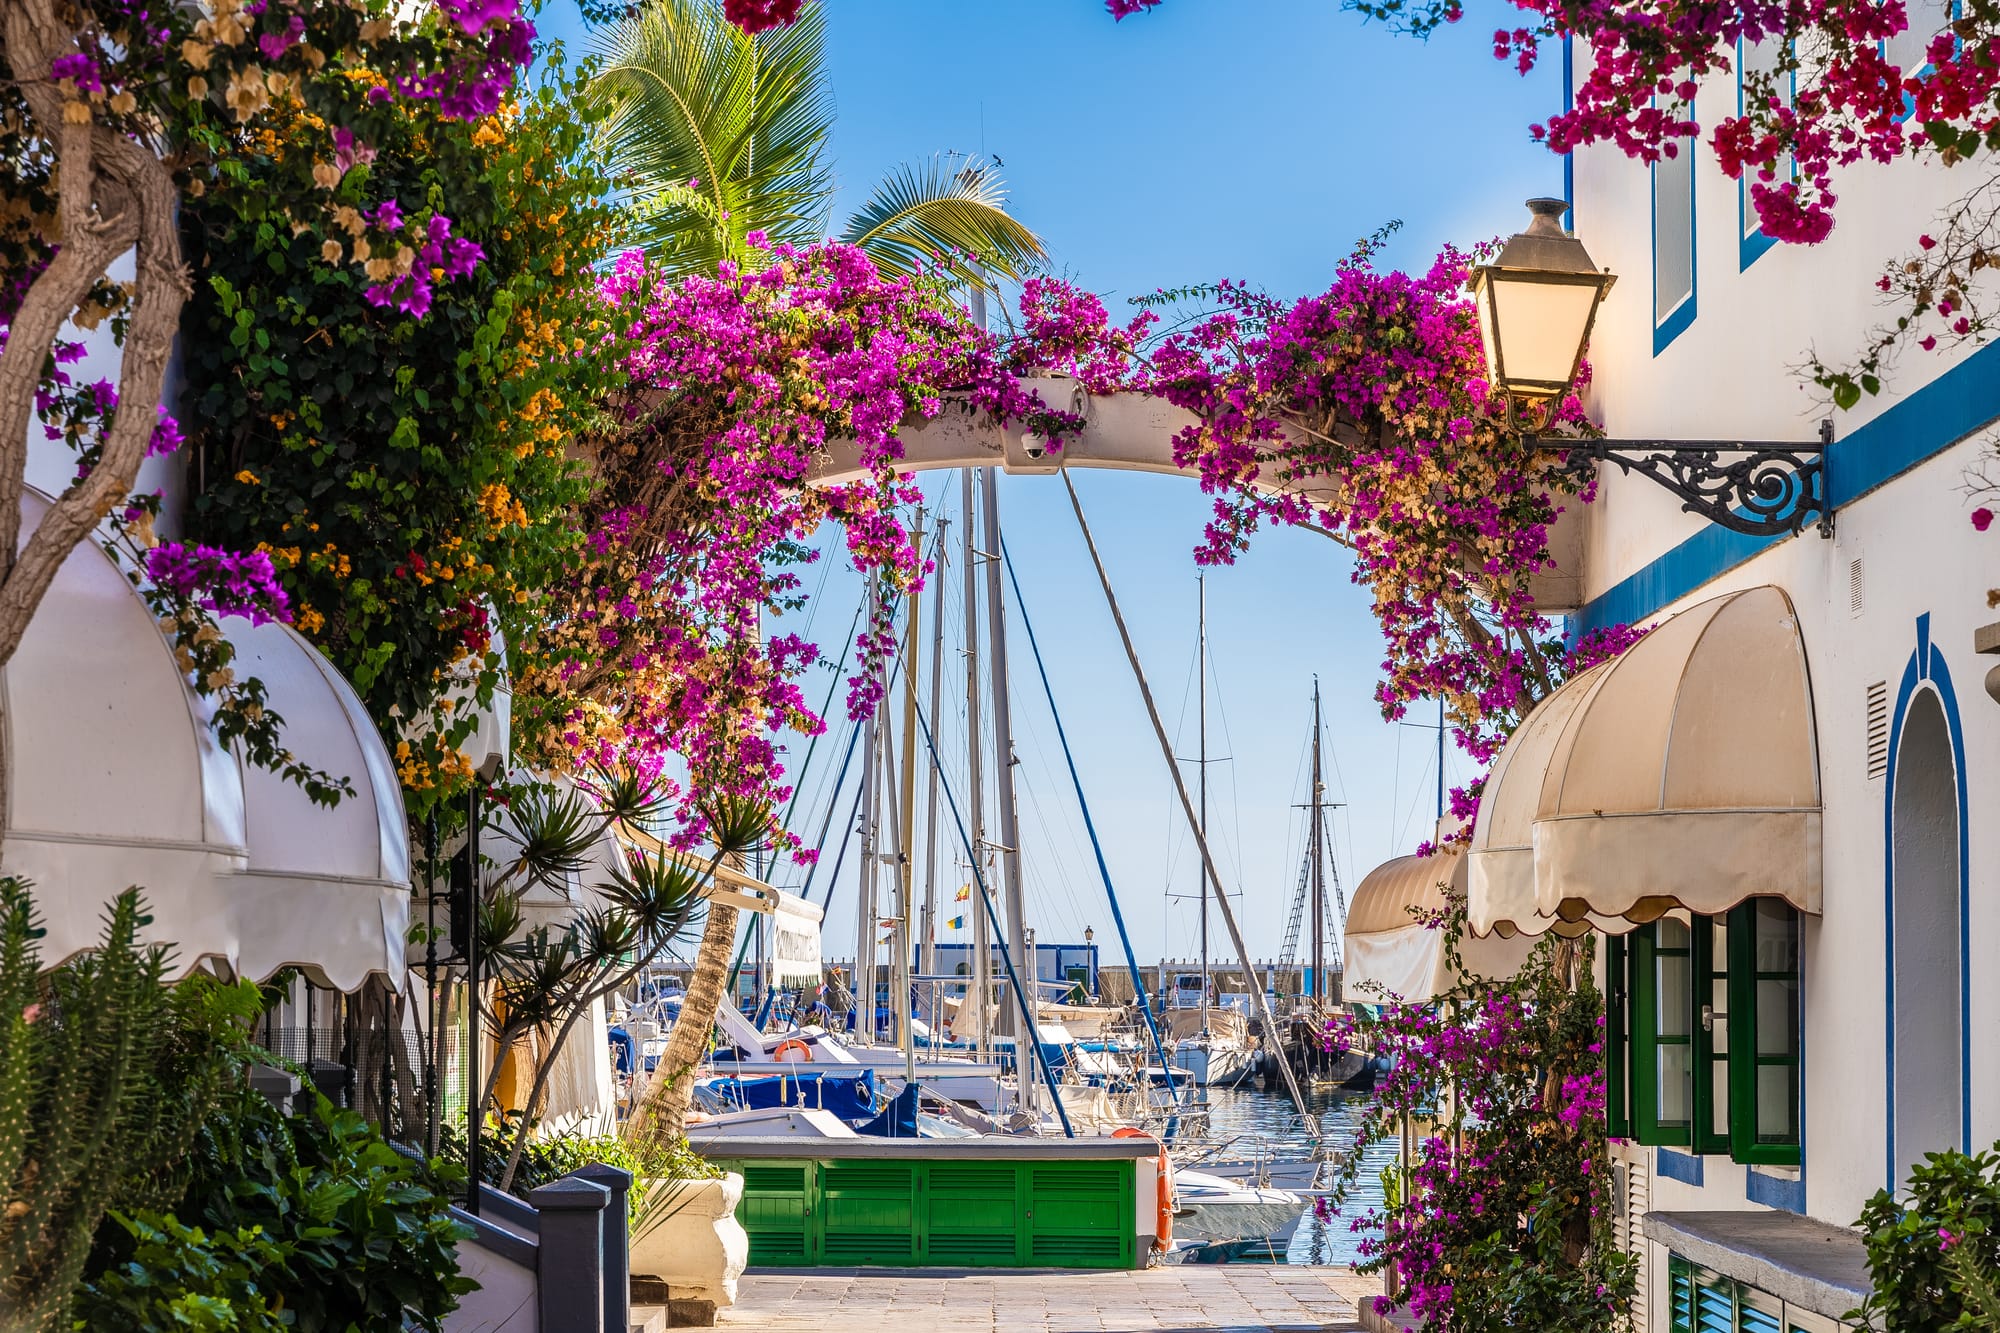 Best Places To Visit In Europe In Spring (Pictured - Puerto de Mogan, Gran Canaria)